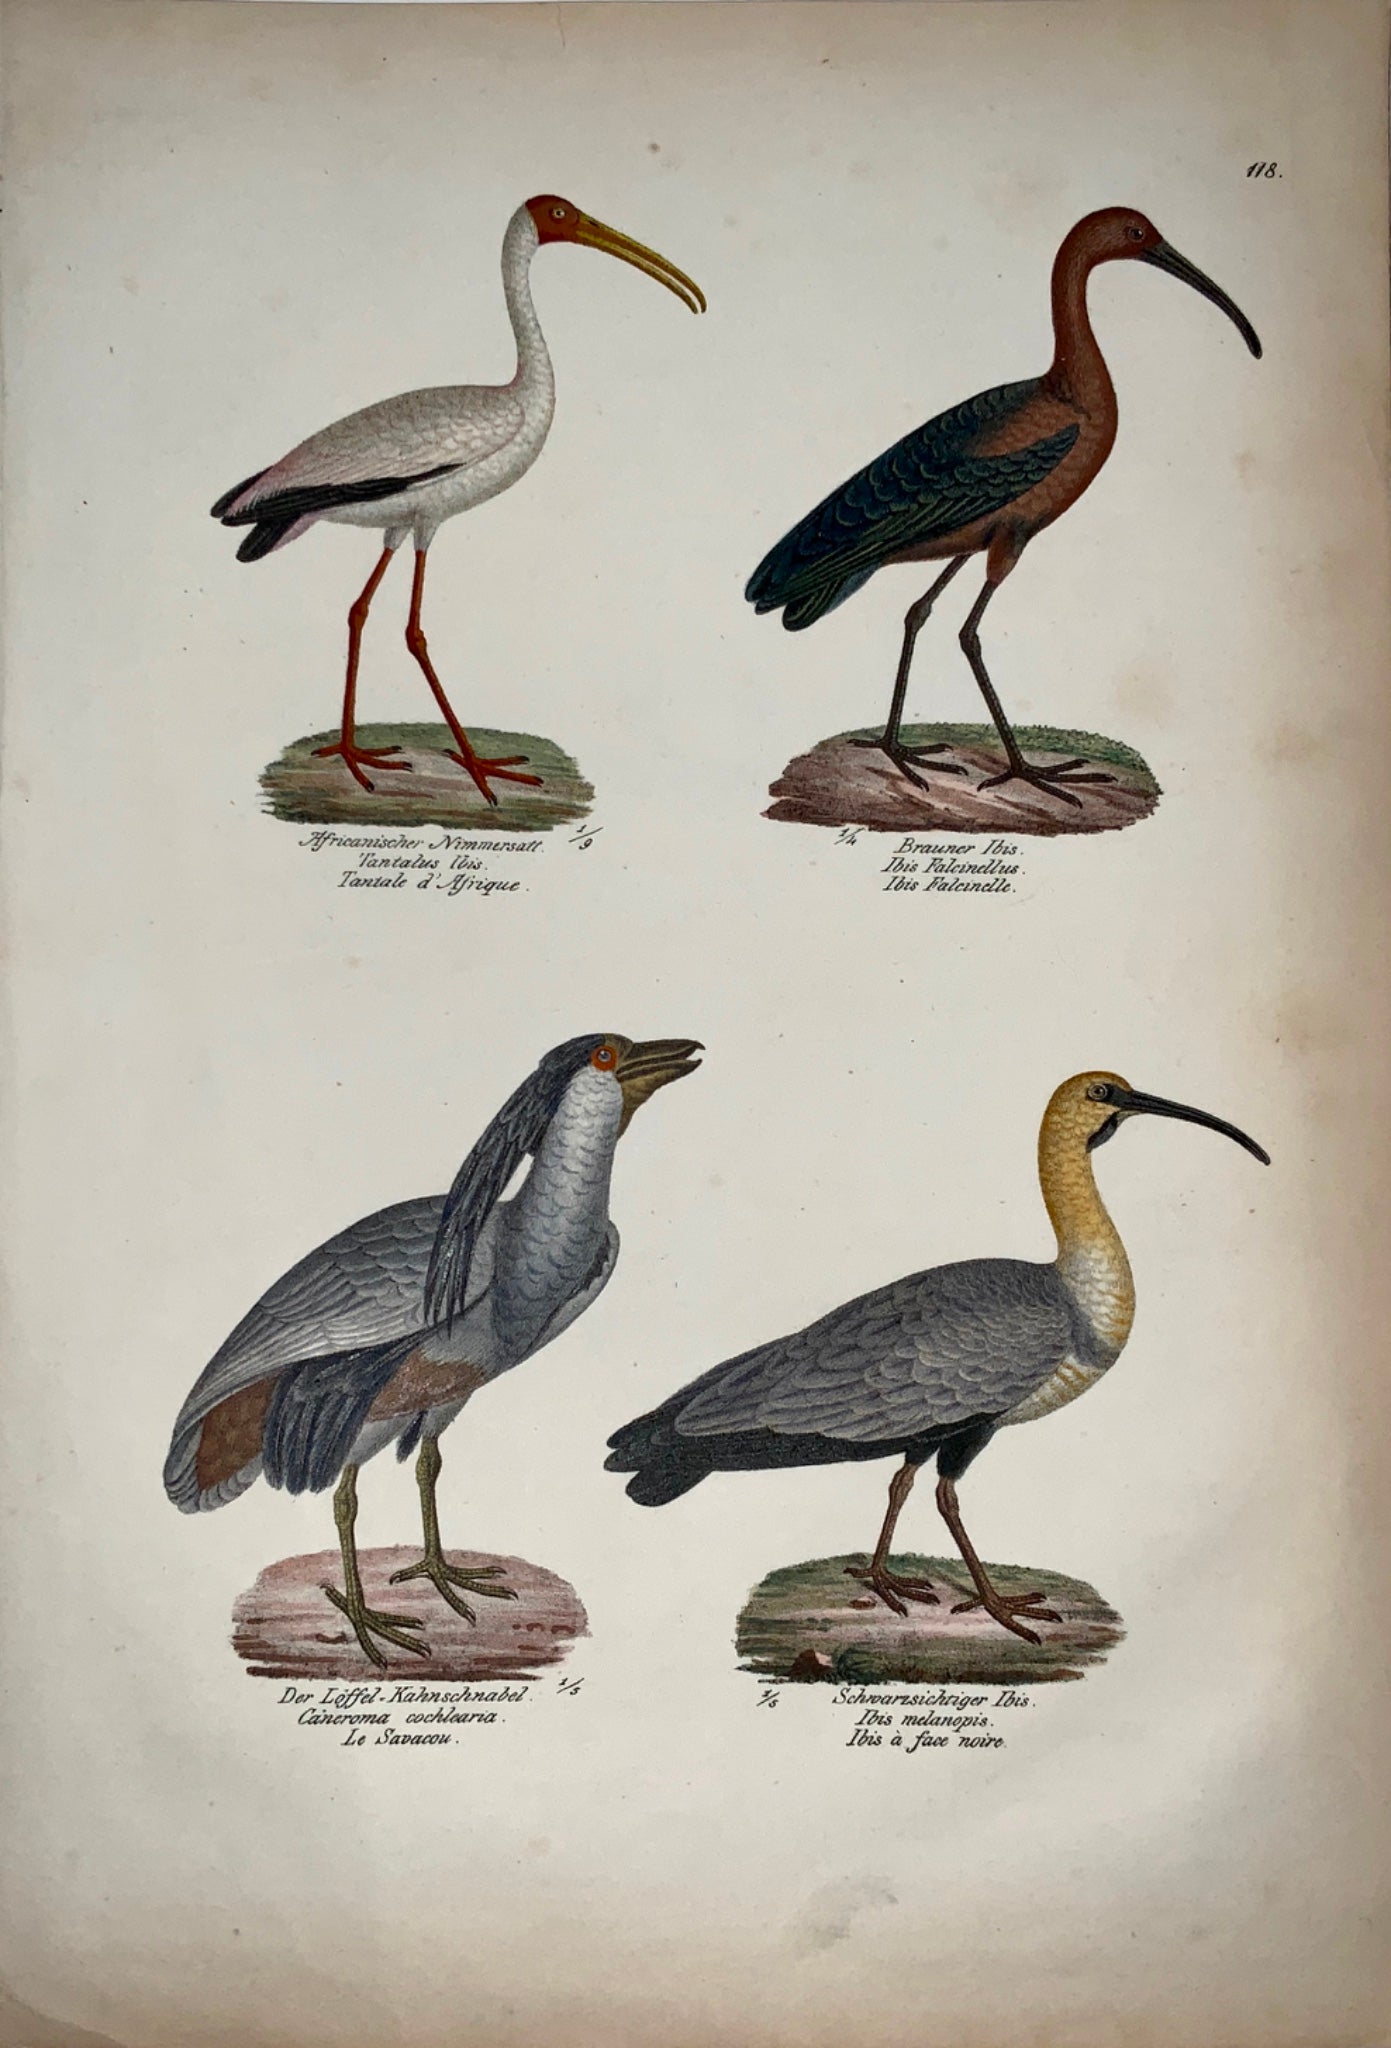 1830 Ibis Billed Heron Ornithology Brodtmann hand coloured FOLIO lithography